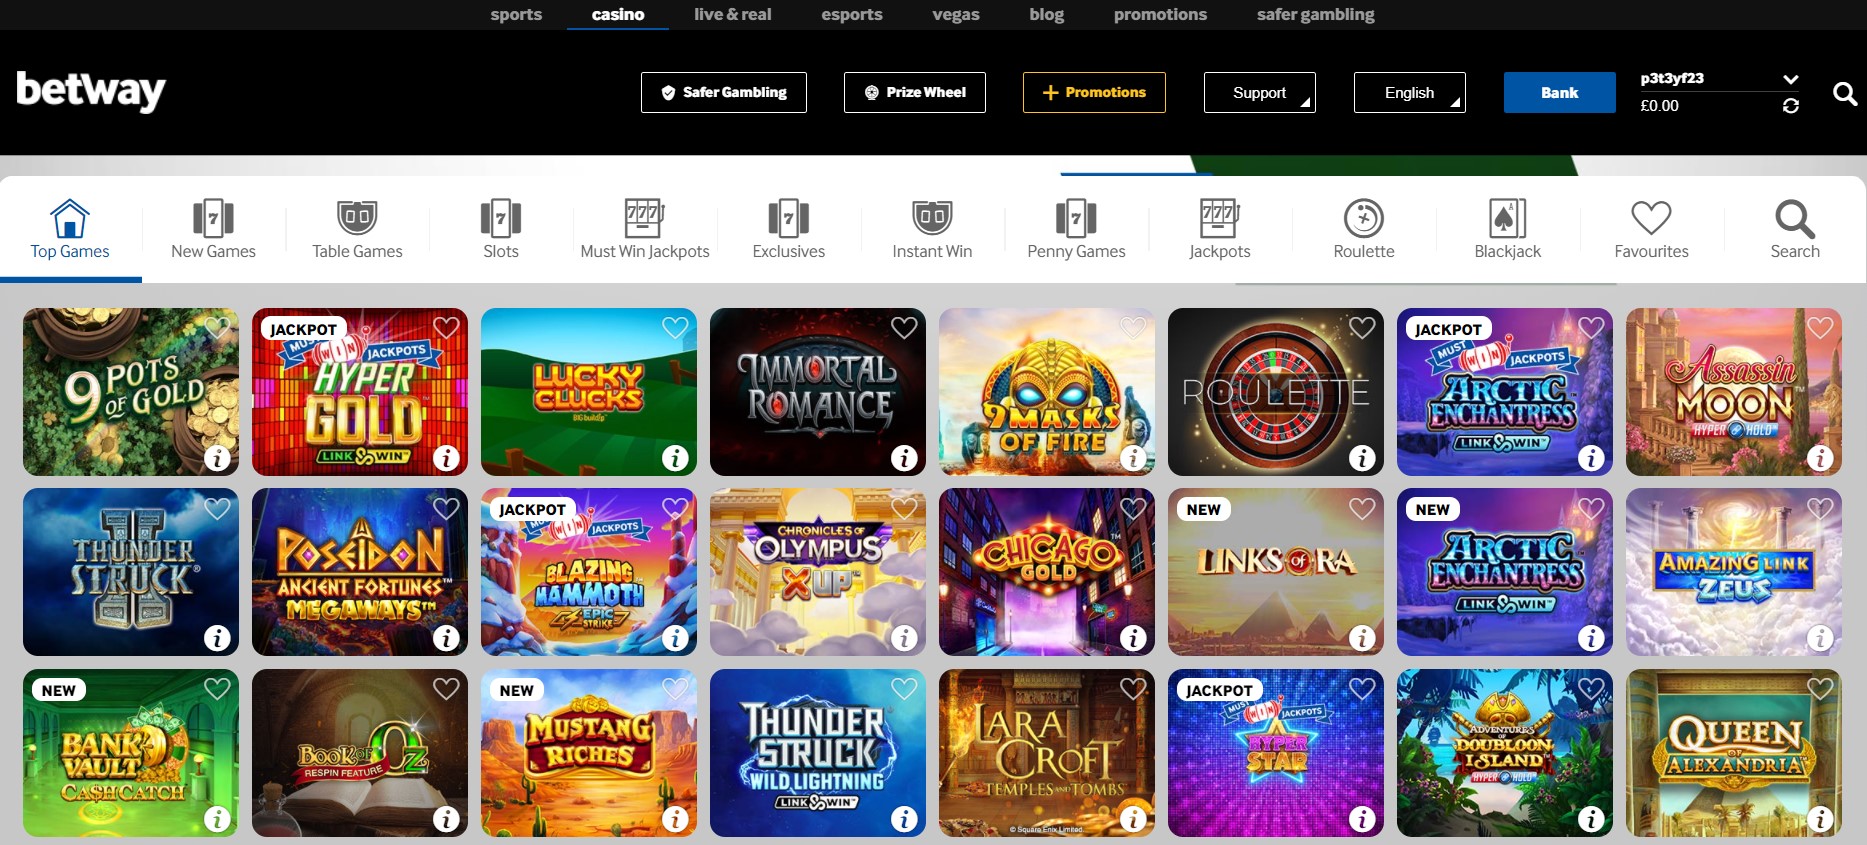 Breaking Down the Odds in online casino dubai Games